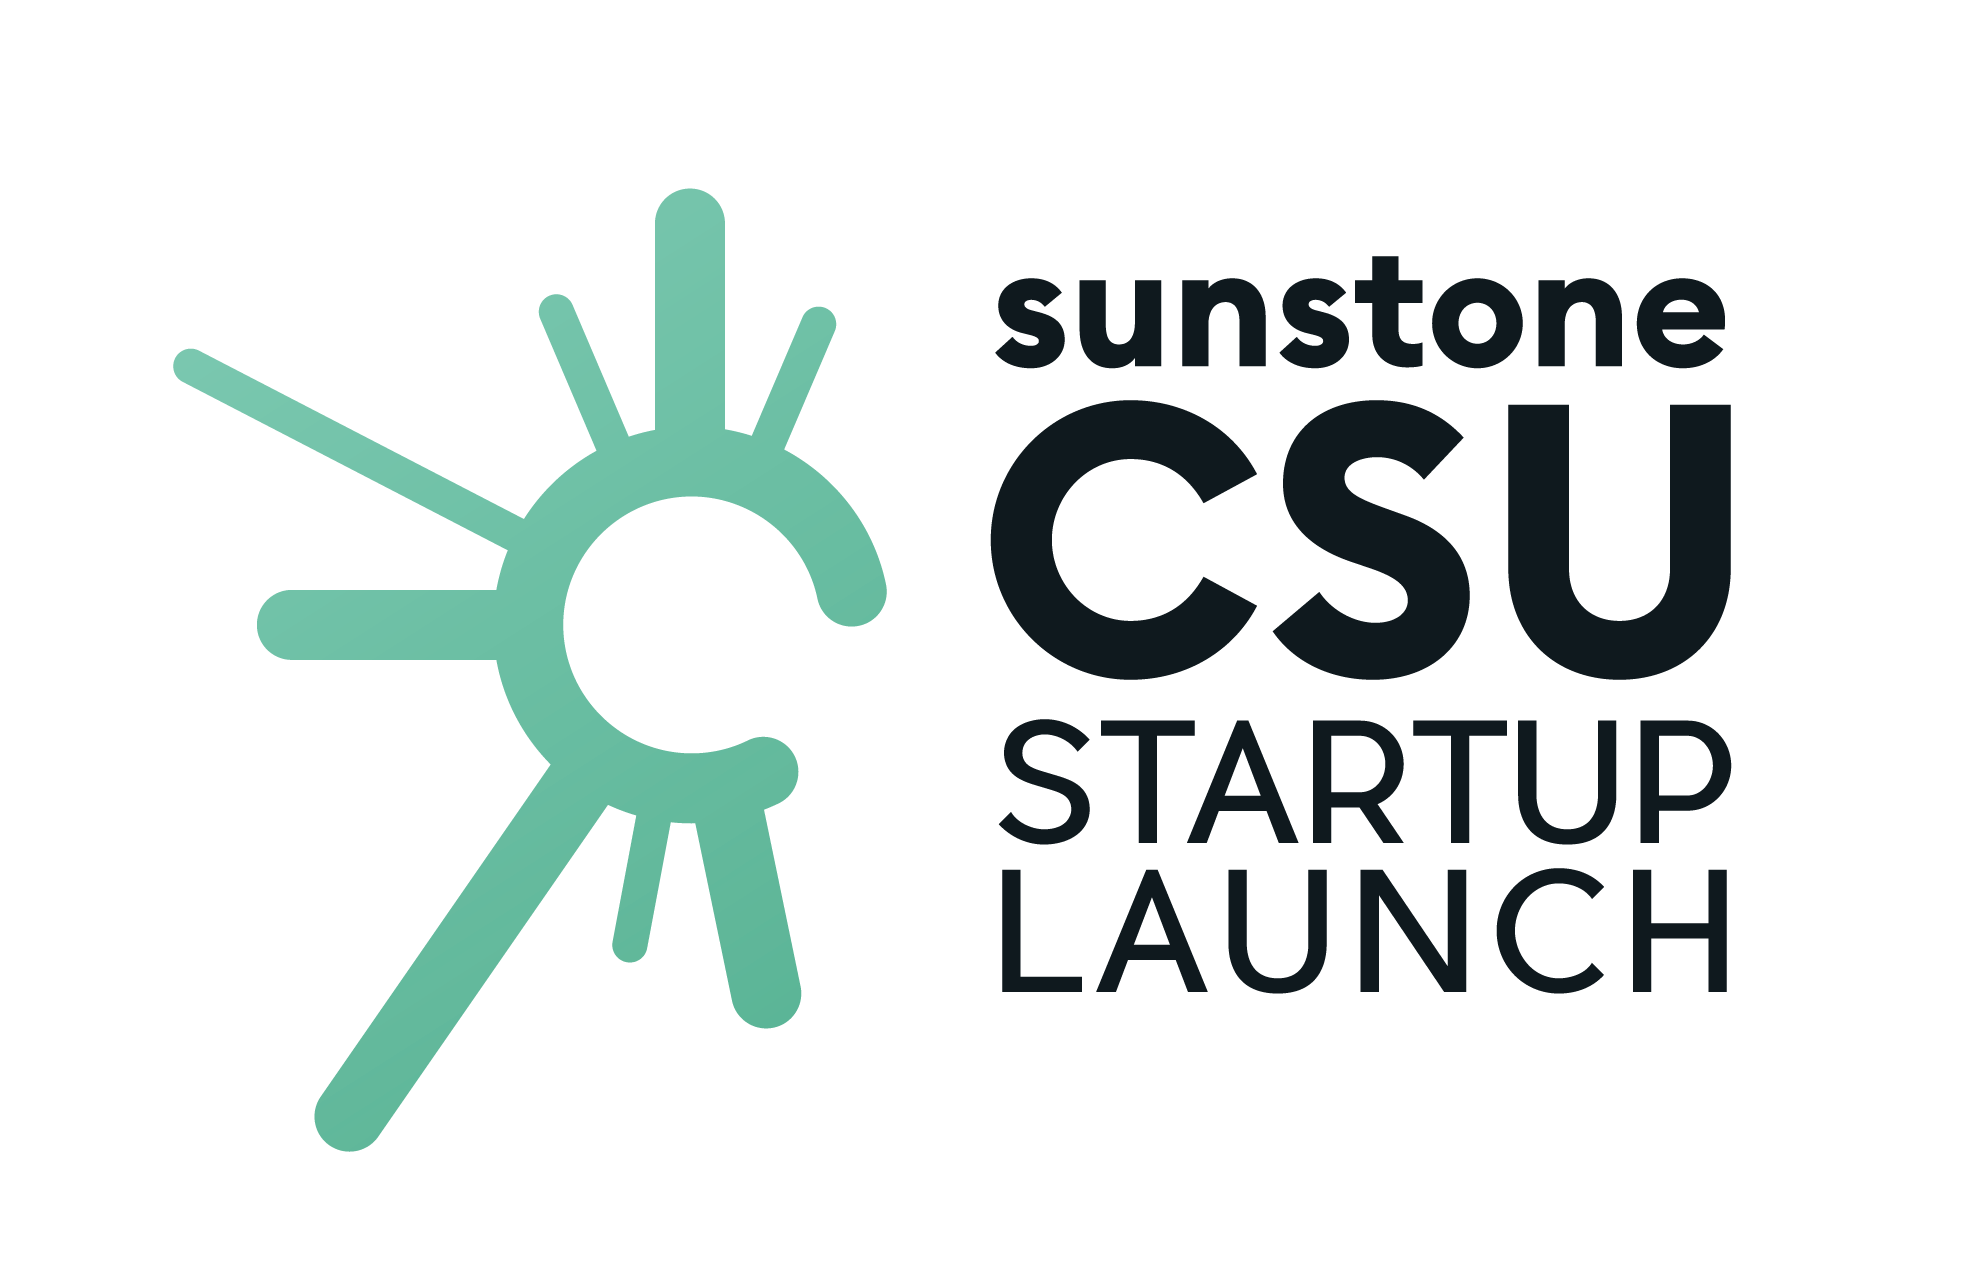 Sunstone CSU Startup Launch Competition